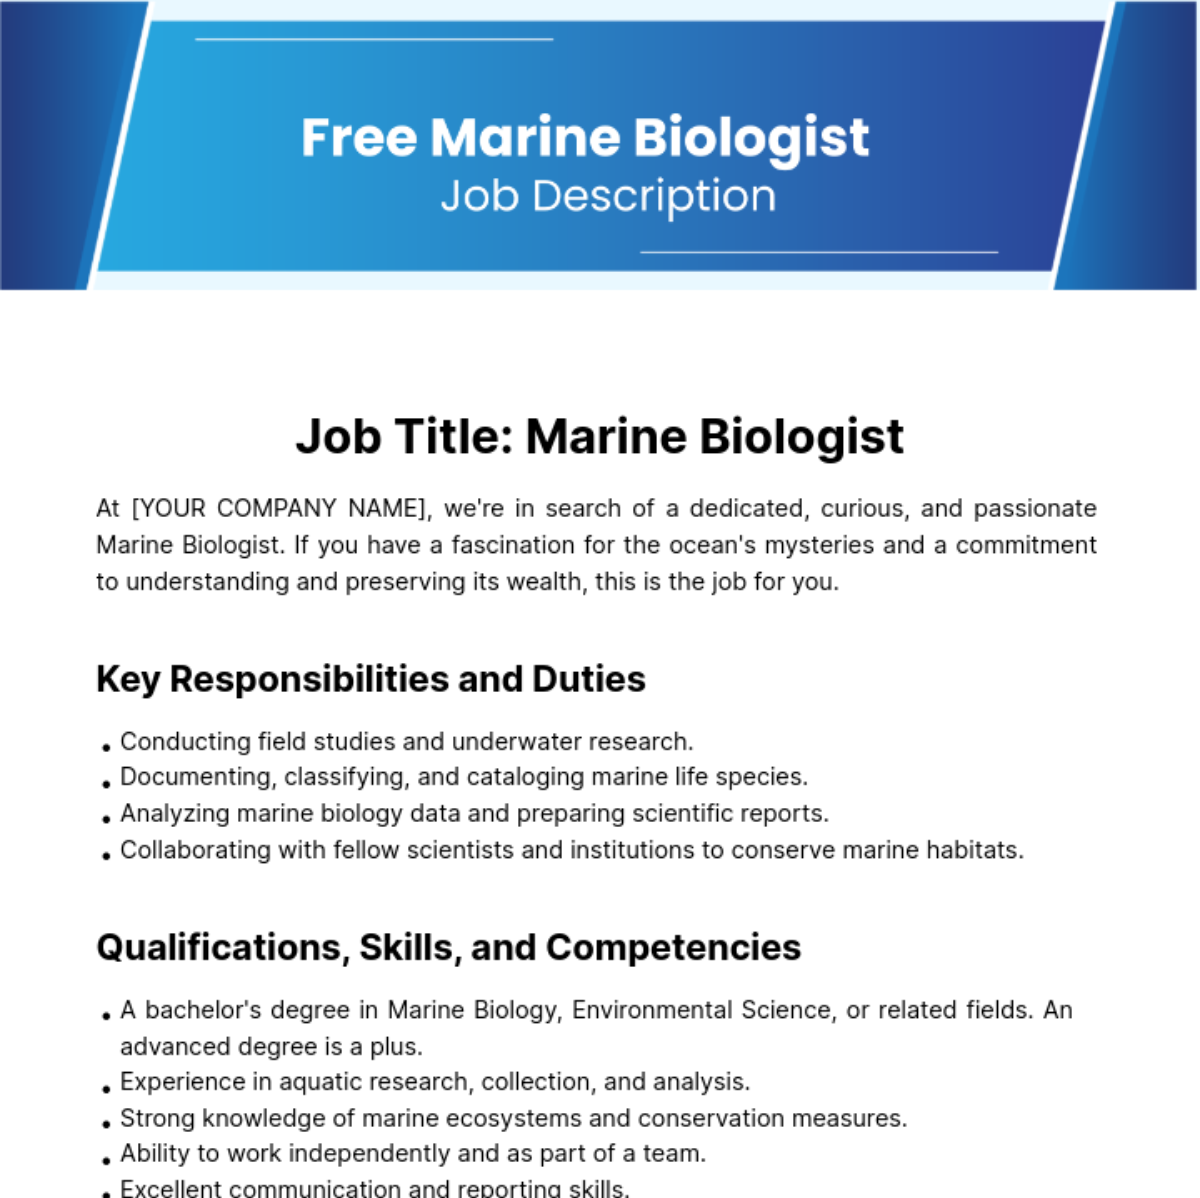 Marine Biologist Job Description Template